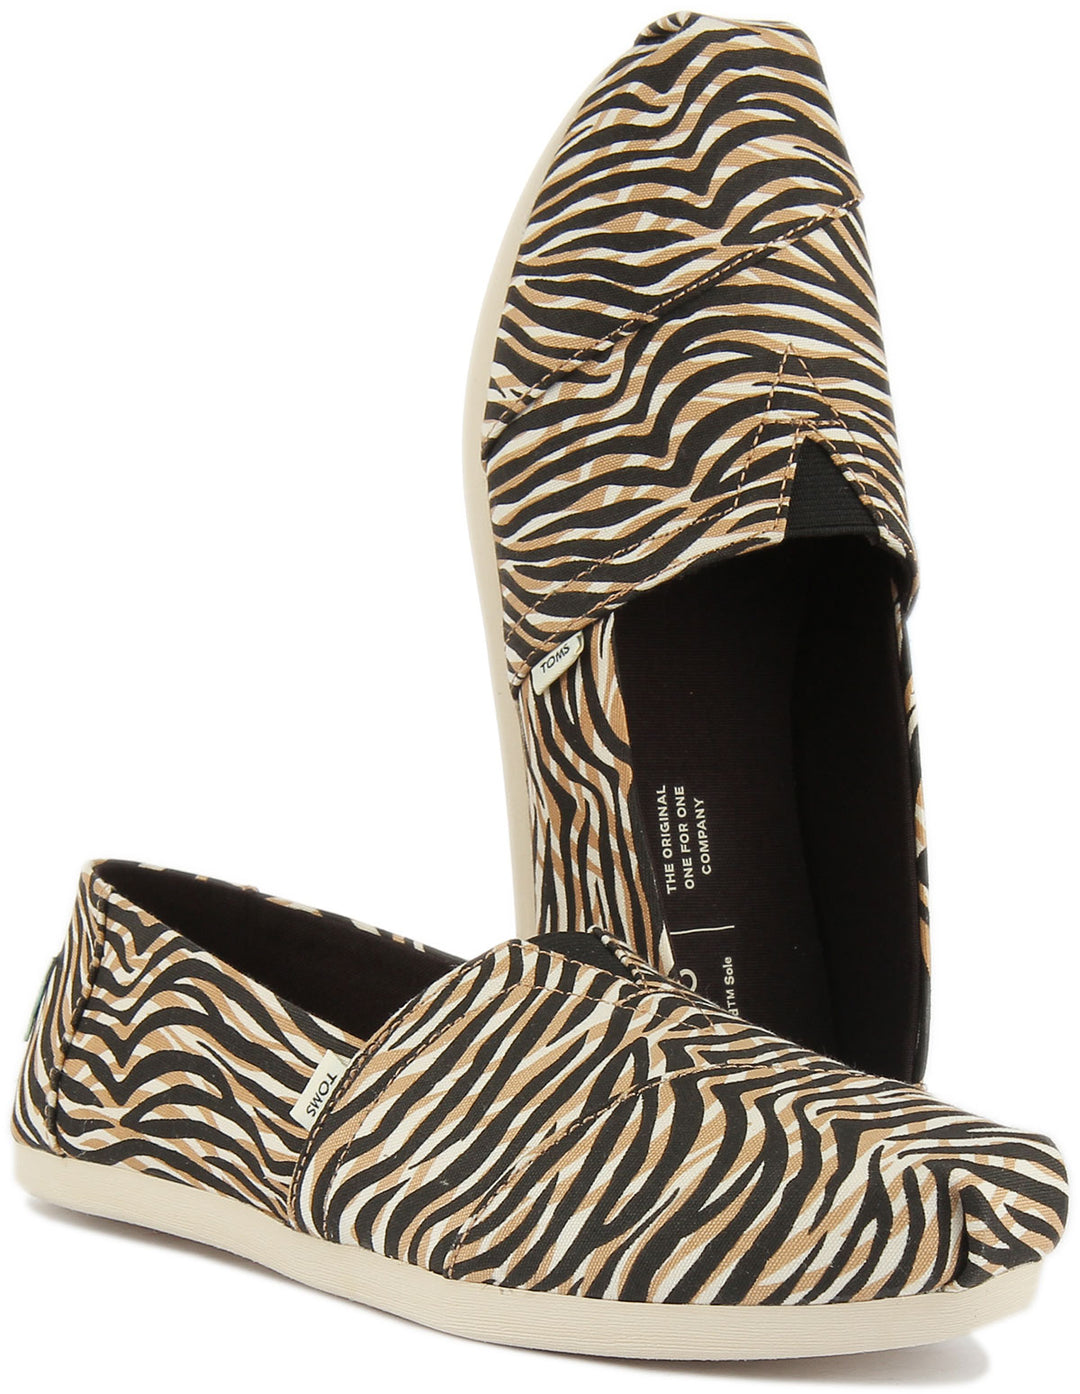 Toms Alpargata Shoes In Zebra For Women